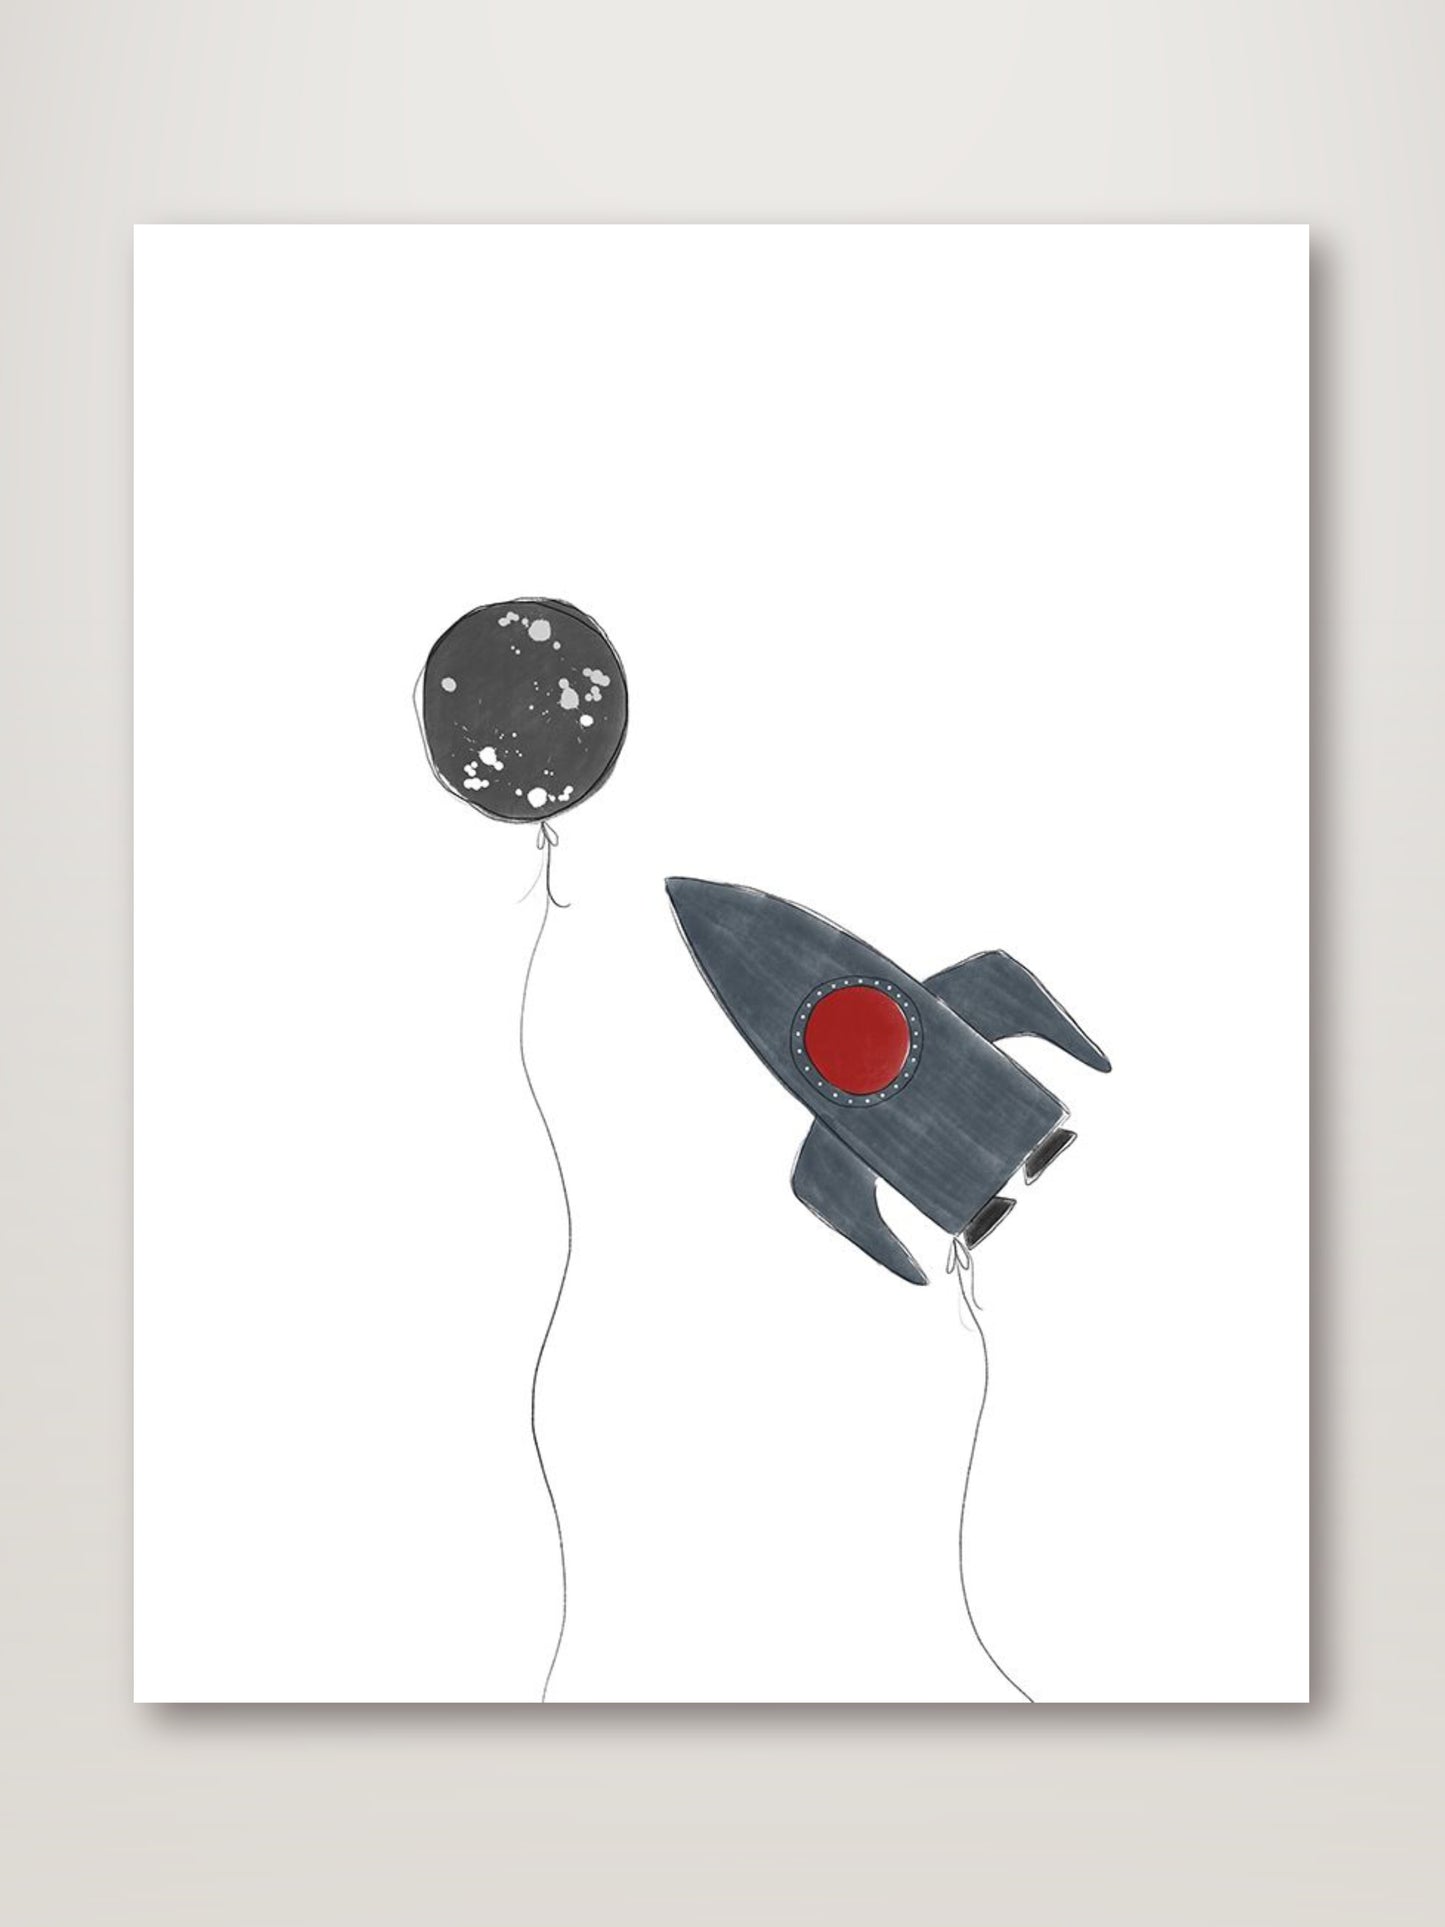 Spaceship Balloons